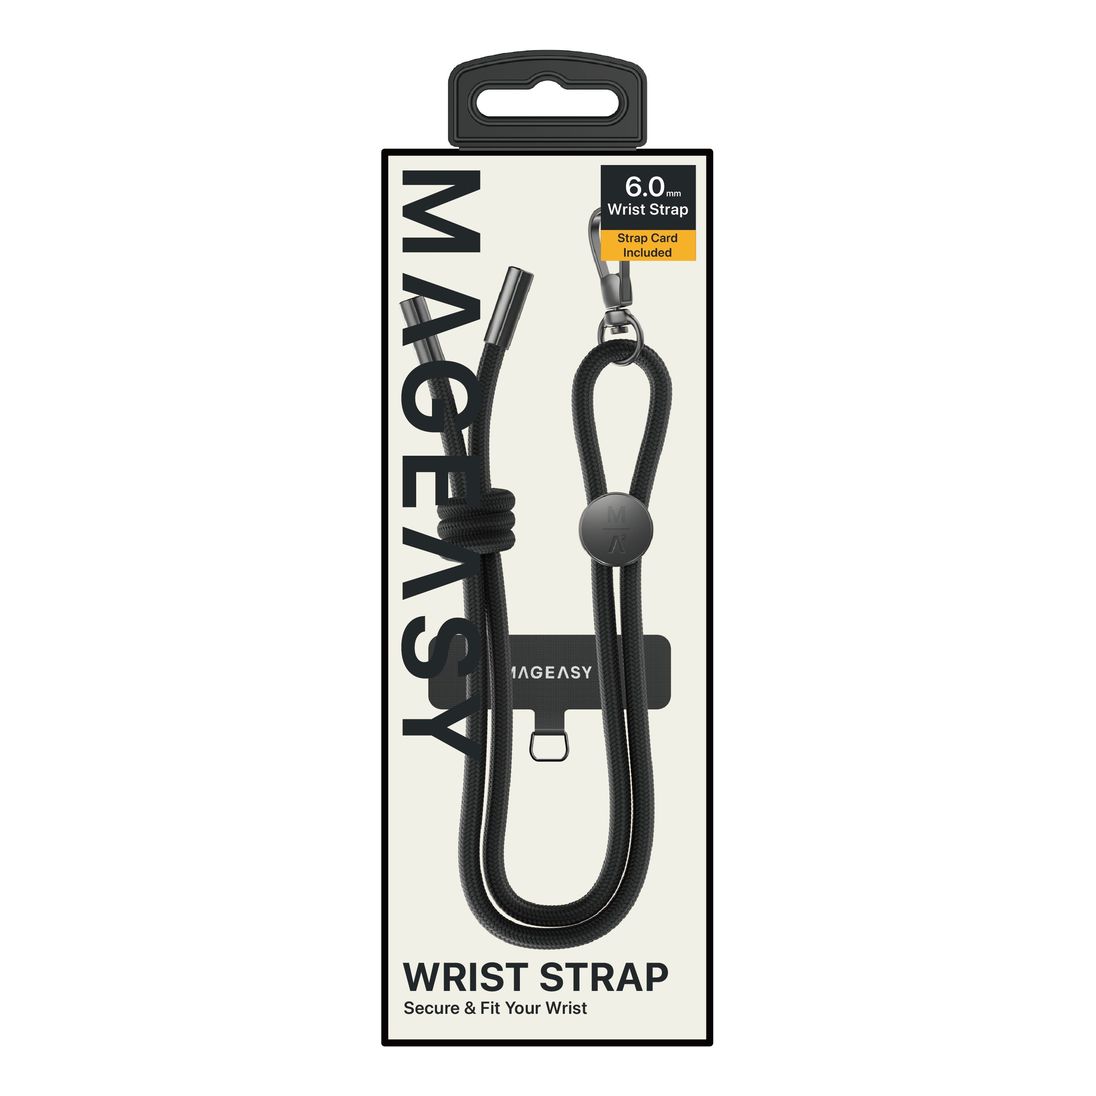 Mageasy Wrist Strap & Strap Card - 6mm - Black